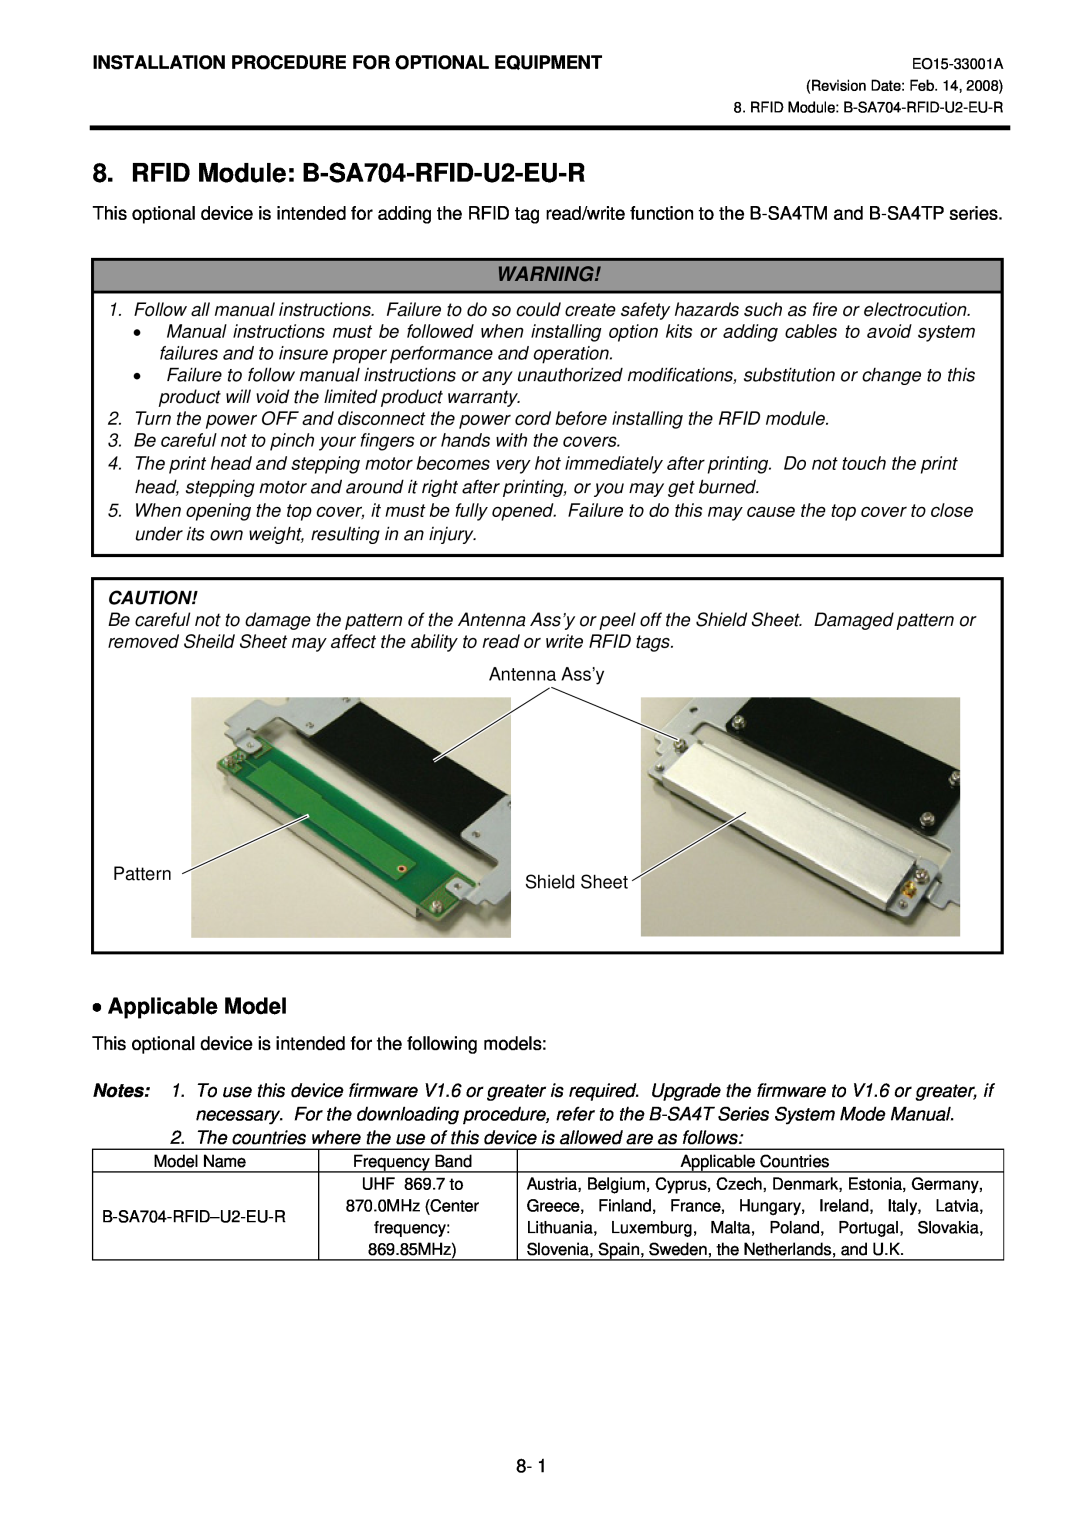 Toshiba B-SA4T RFID Module B-SA704-RFID-U2-EU-R, Applicable Model, Installation Procedure For Optional Equipment 